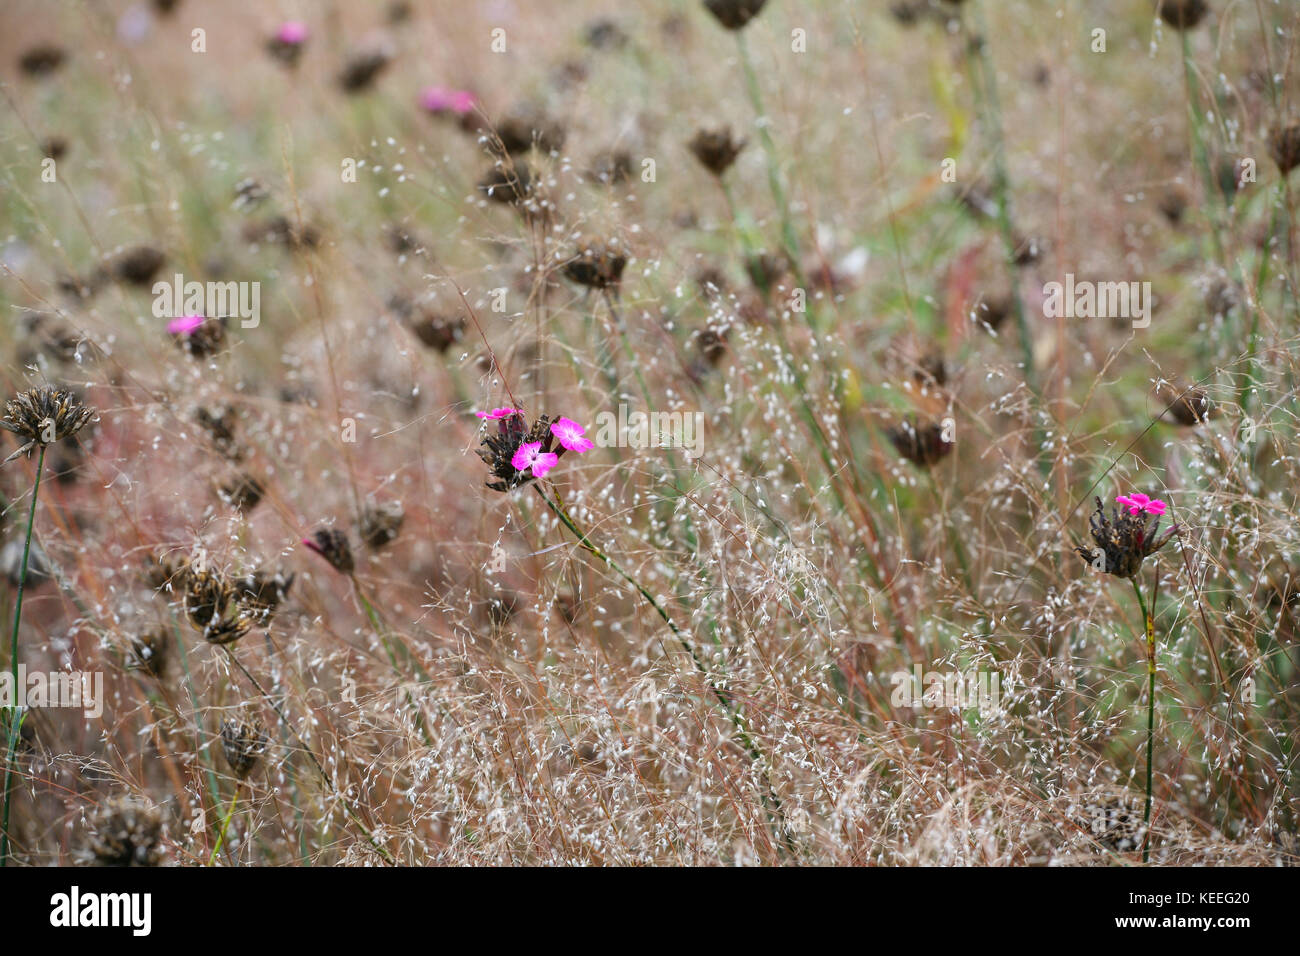 Dianthus carthusianorum fioritura in tra erbe, tarda estate / autunno Foto Stock